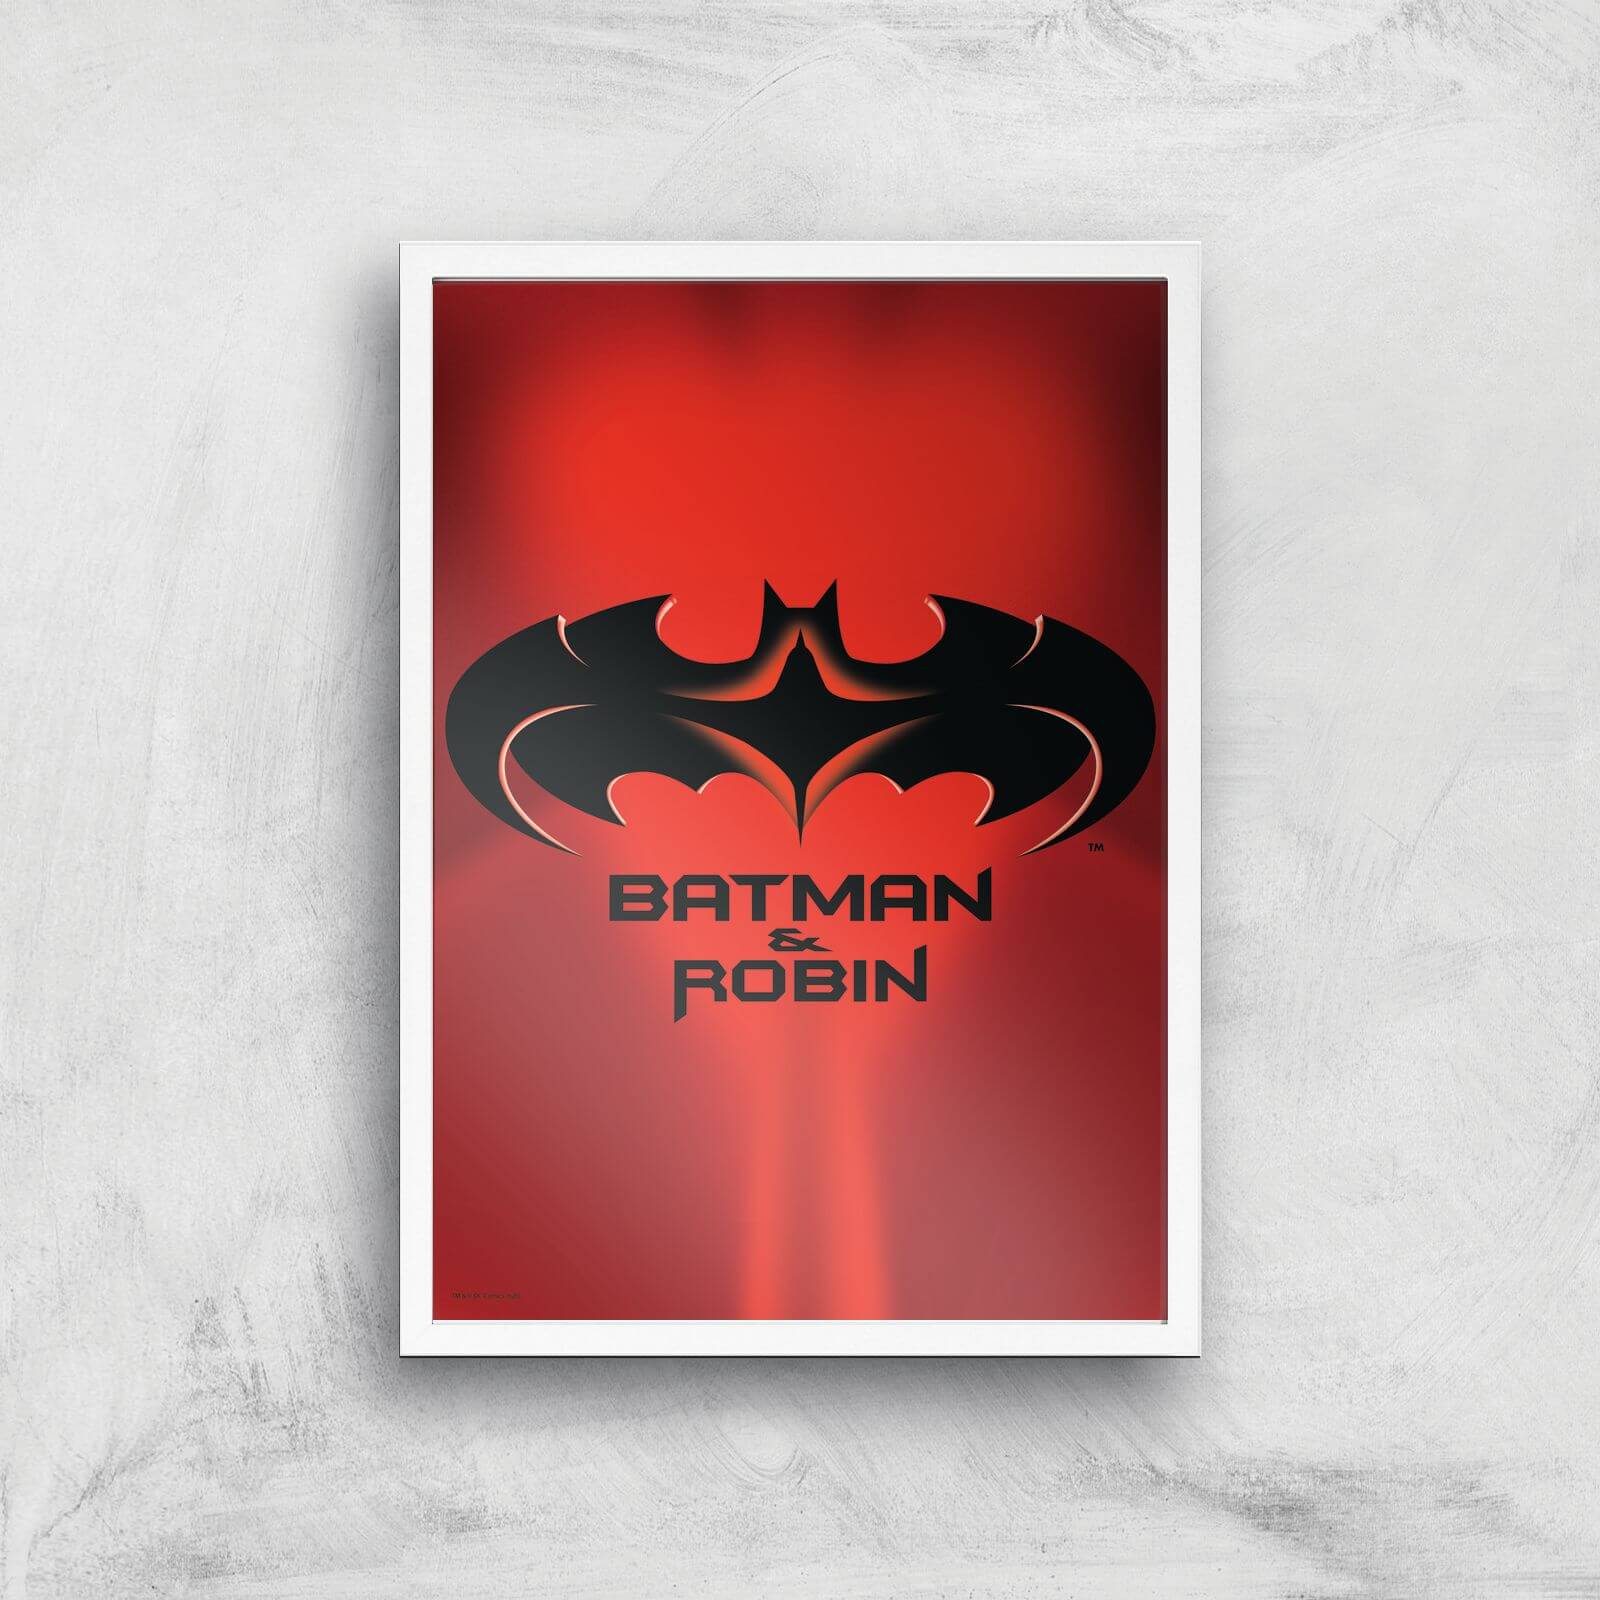 Batman & Robin Giclee Art Print - A3 - White Frame